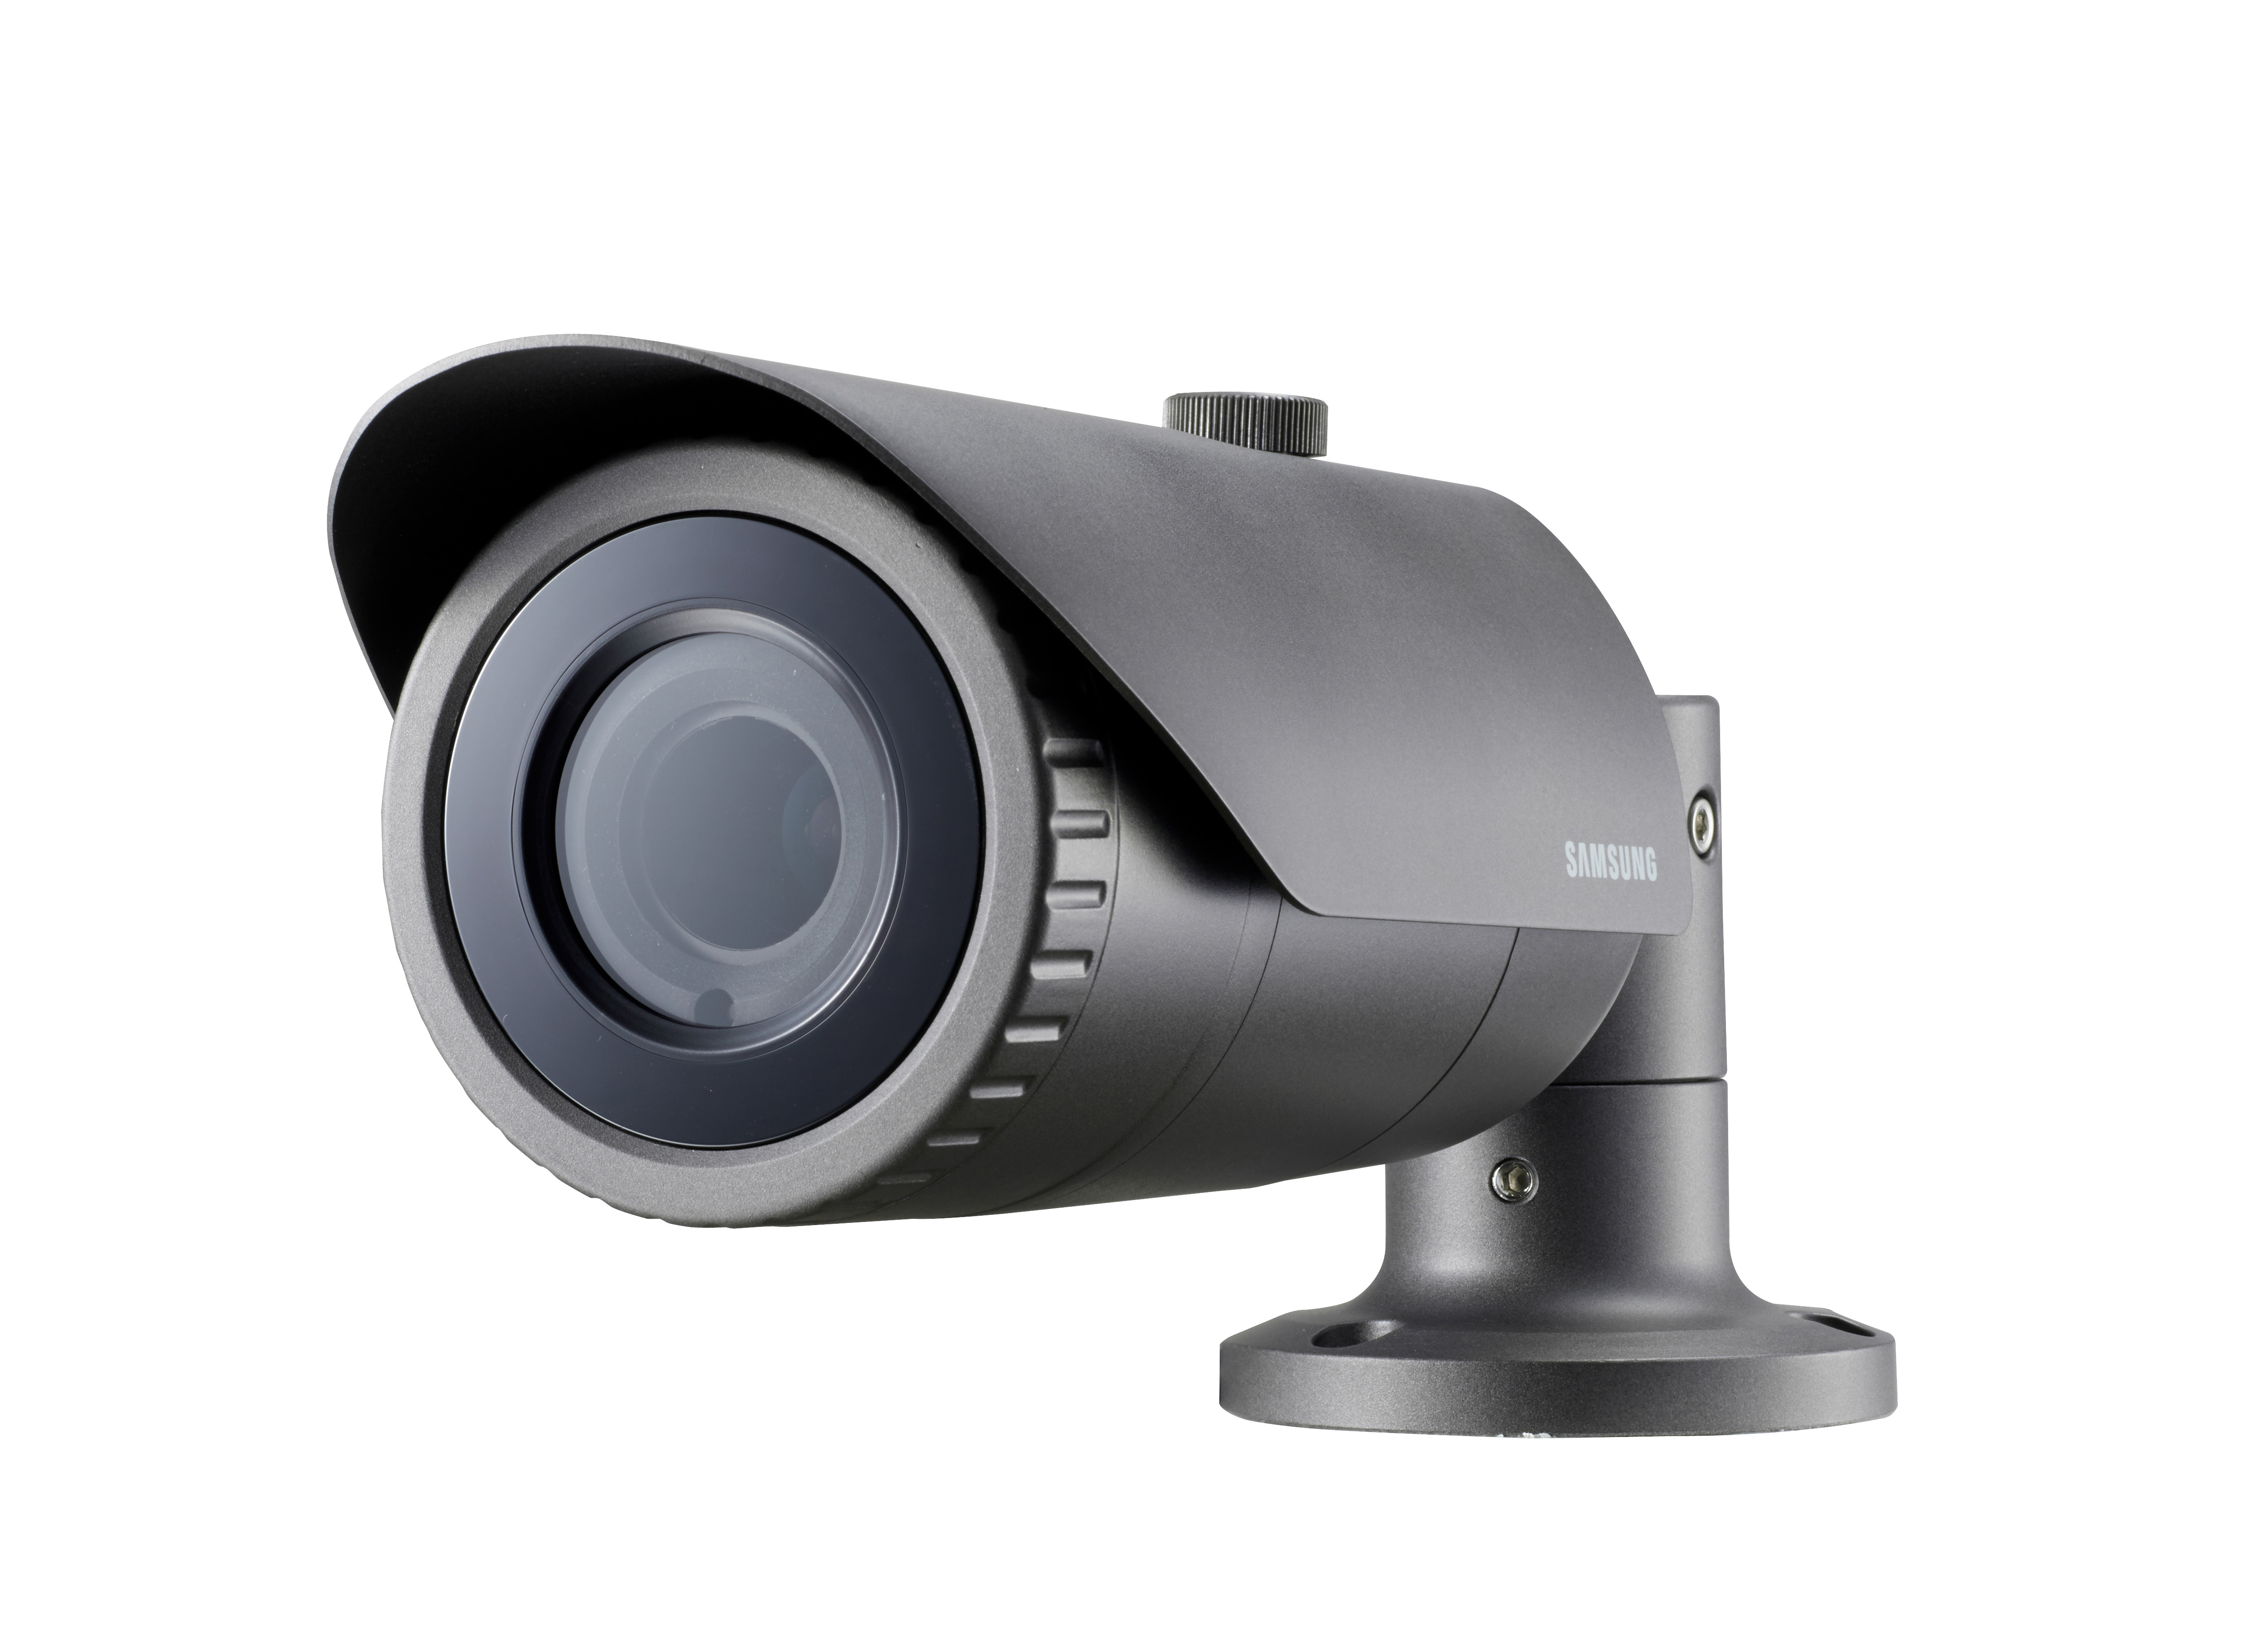 Samsung SCO-6083R - FULL HD 1080p dan/noć HD+ kamera u antivandal bullet kućištu, 2 megapiksela, 30fps